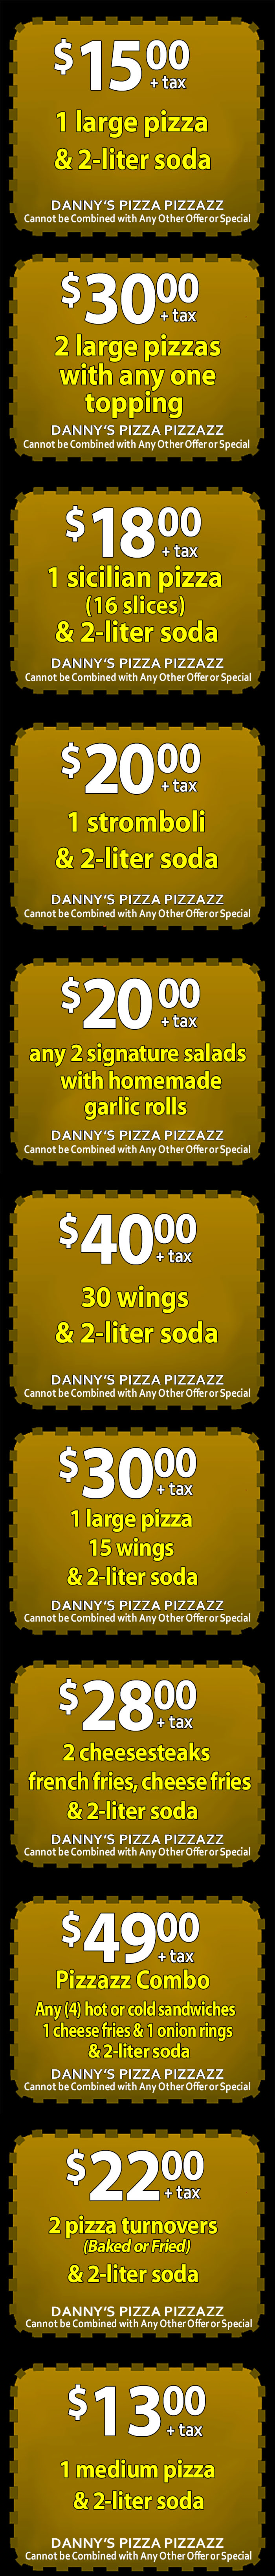 dannys-pizza-pizzazz-pole-tavern-monroeville-nj mobile coupons